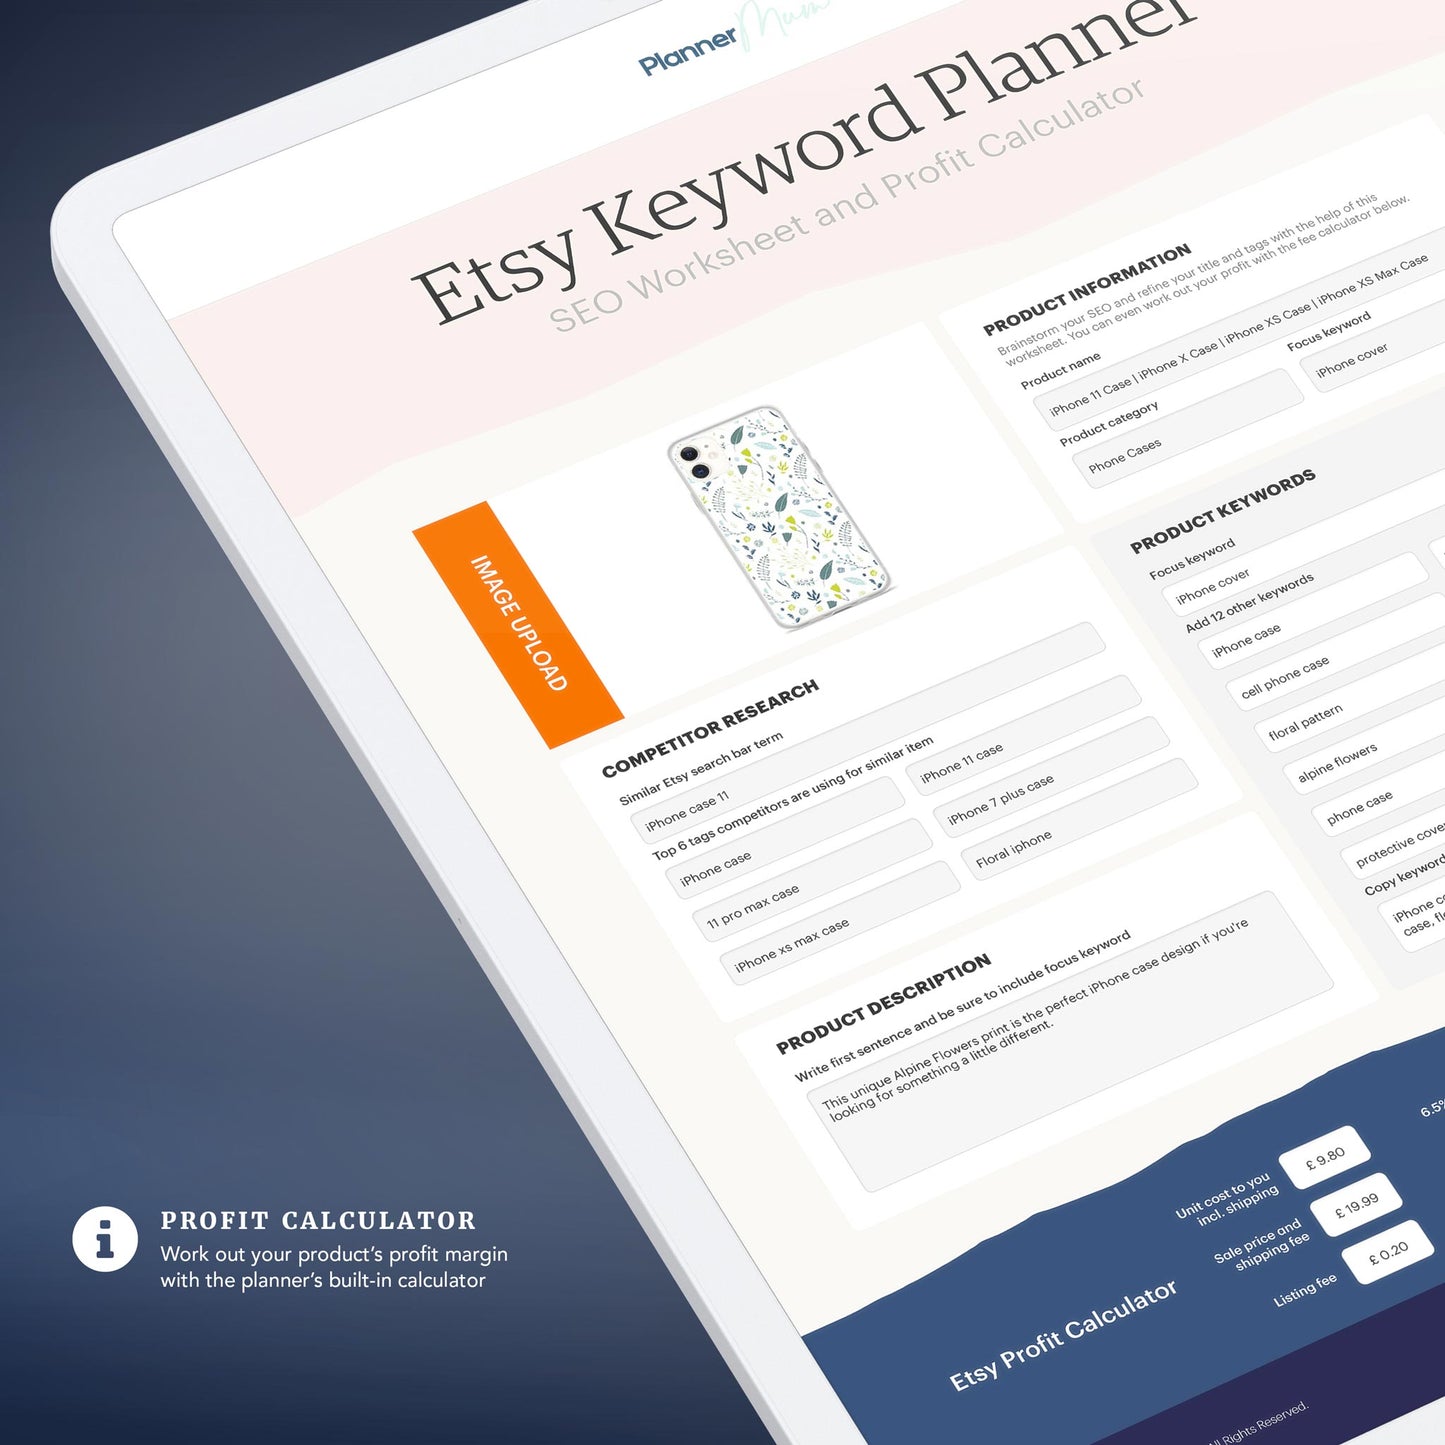 Interactive Etsy Keyword Planner